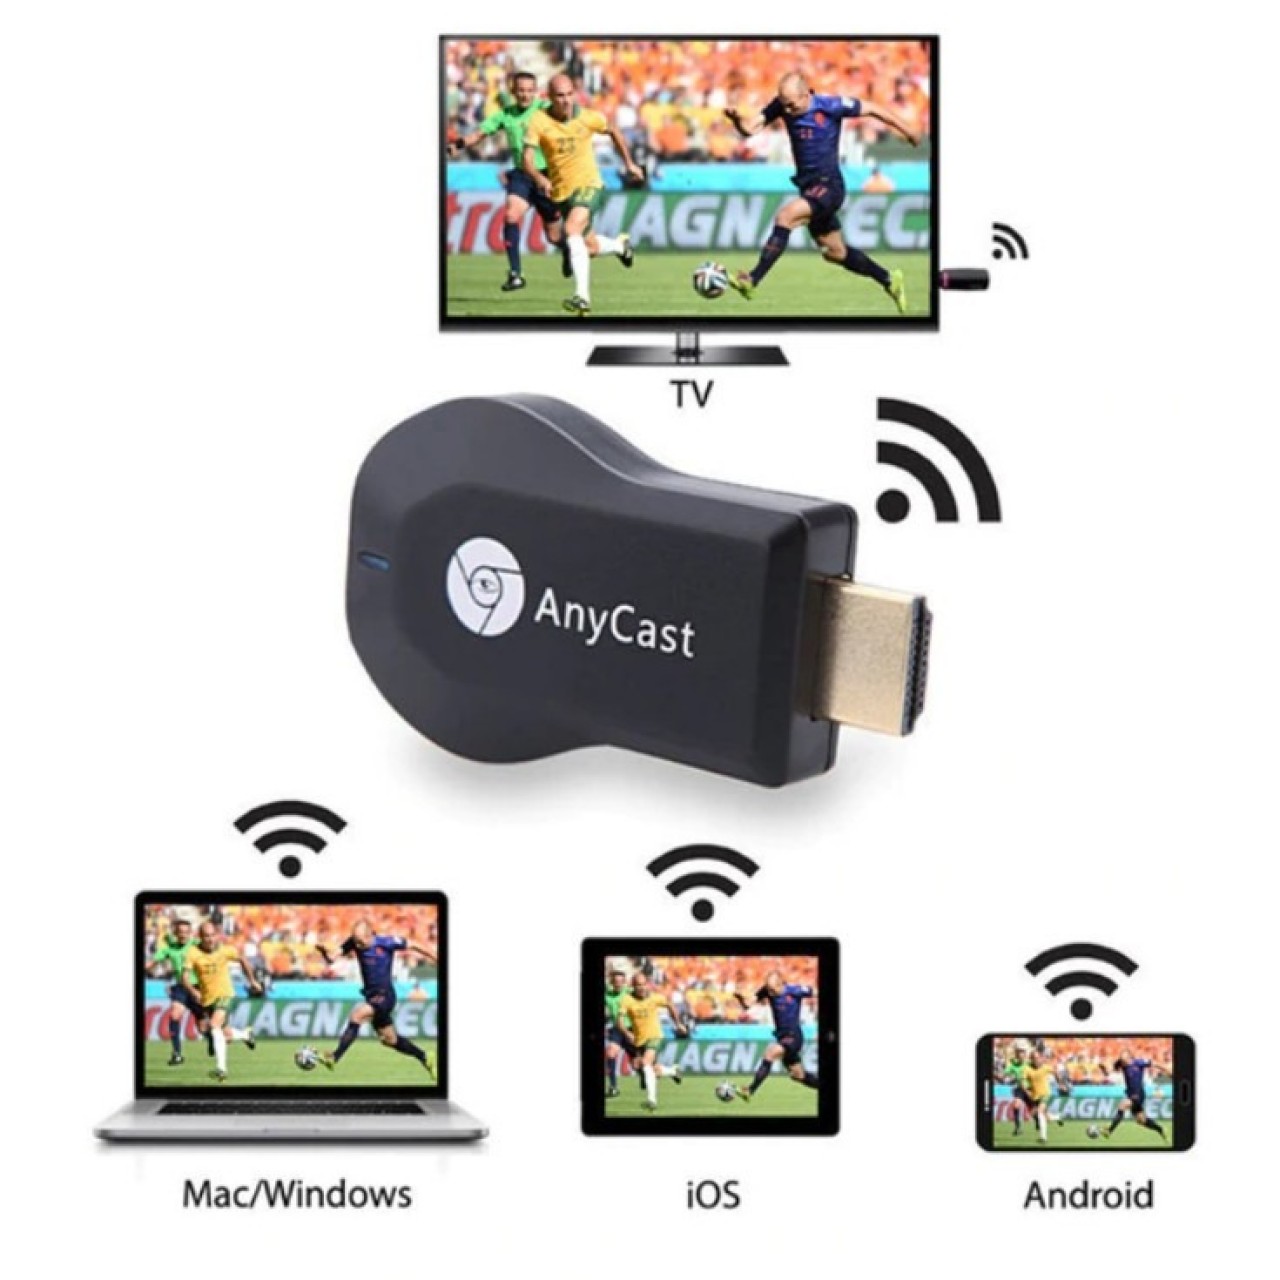 AnyCast M4 Plus 2OTA-Core Wireless WiFi Display Dongle Receiver Video Streamer TV Stick - Black